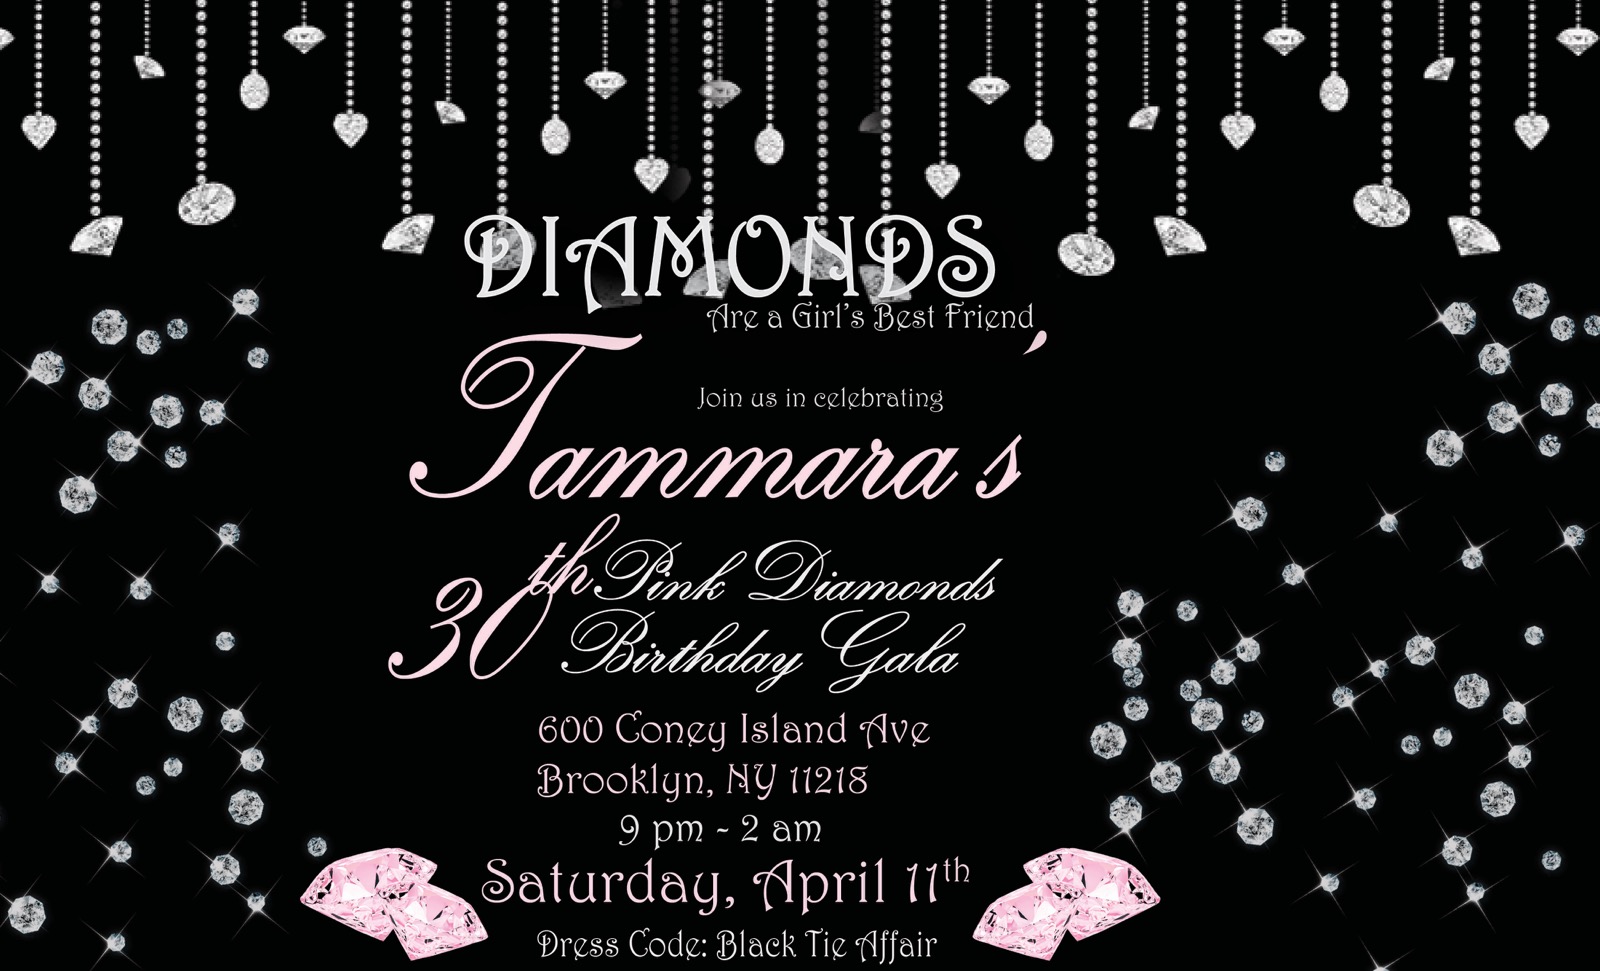 Diamonds Are A Girl's Best Friend!